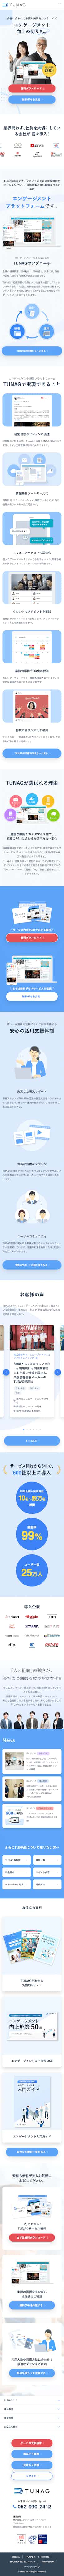 TUNAG ブランドサイトリニューアル開発